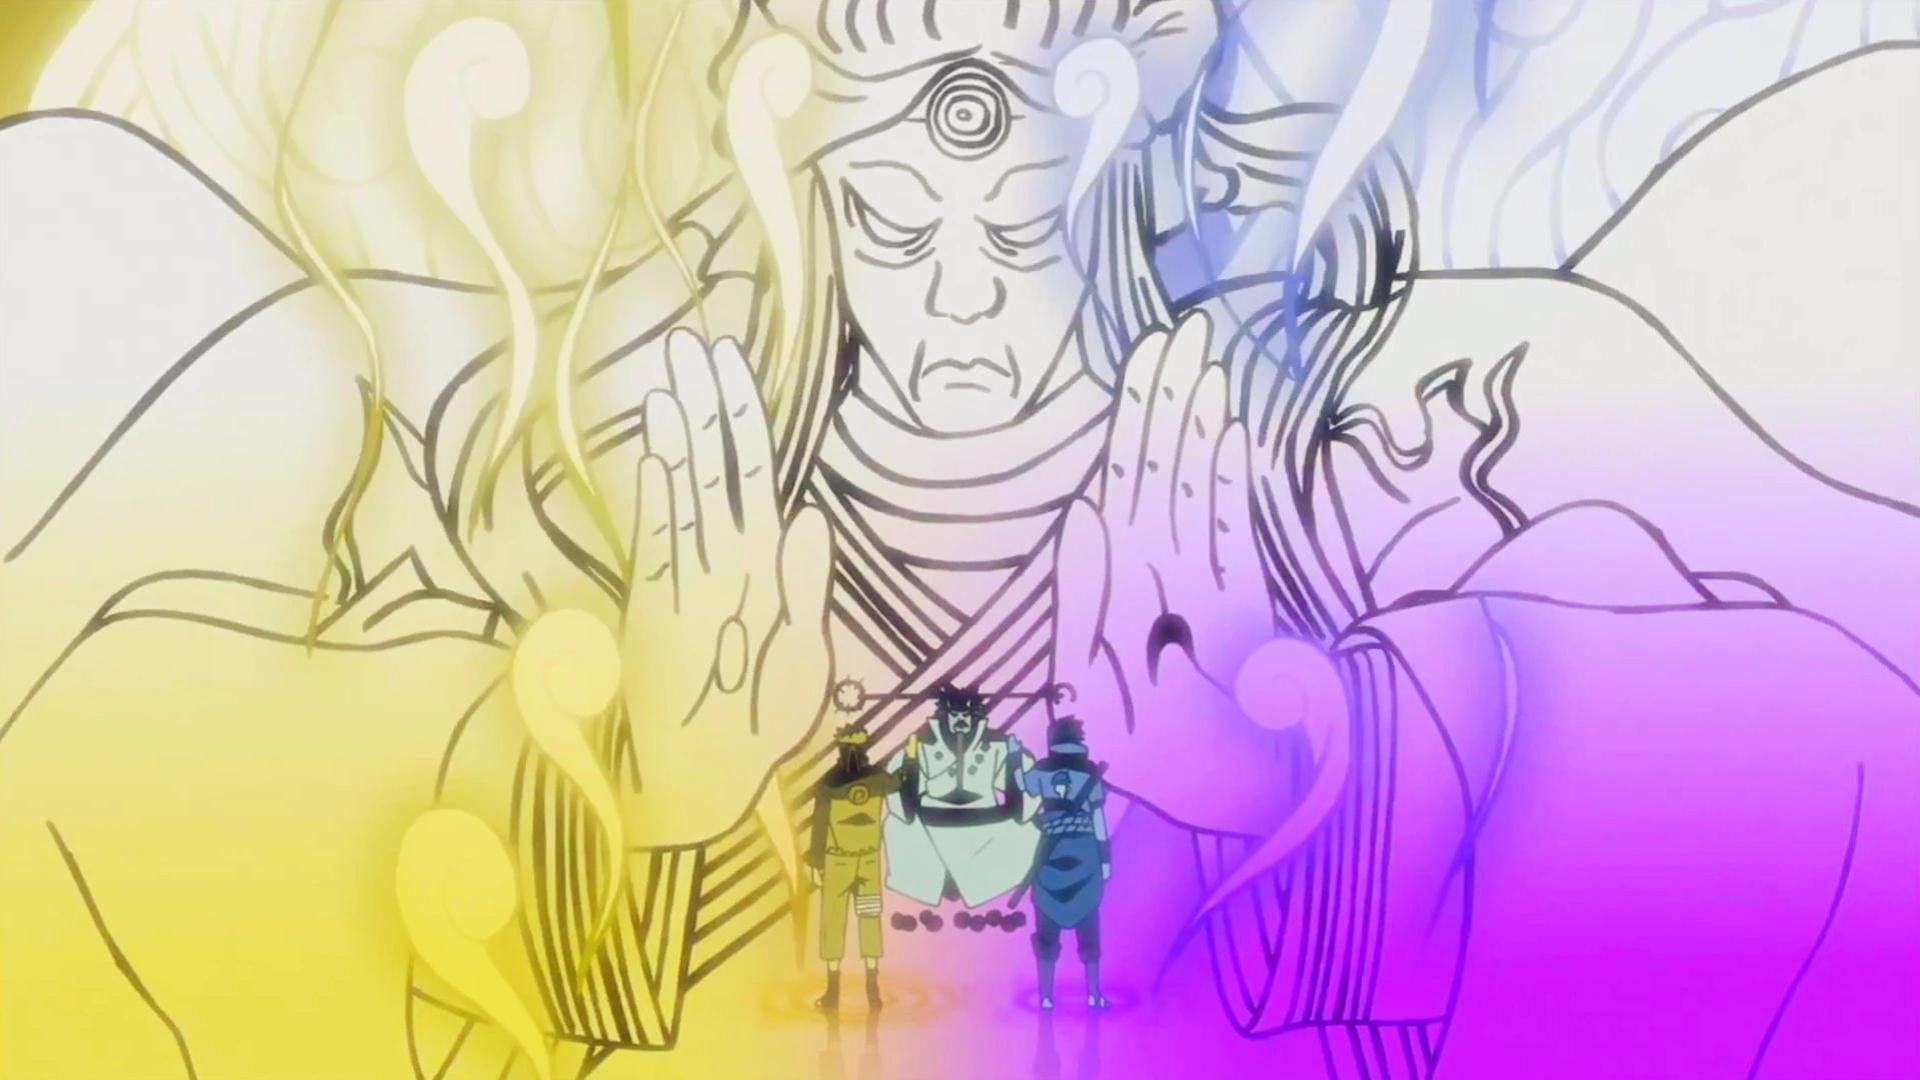 Hagoromo Otsutsuki gives the Sage of Six Paths powers to Naruto and Sasuke (Image via Studio Pierrot)